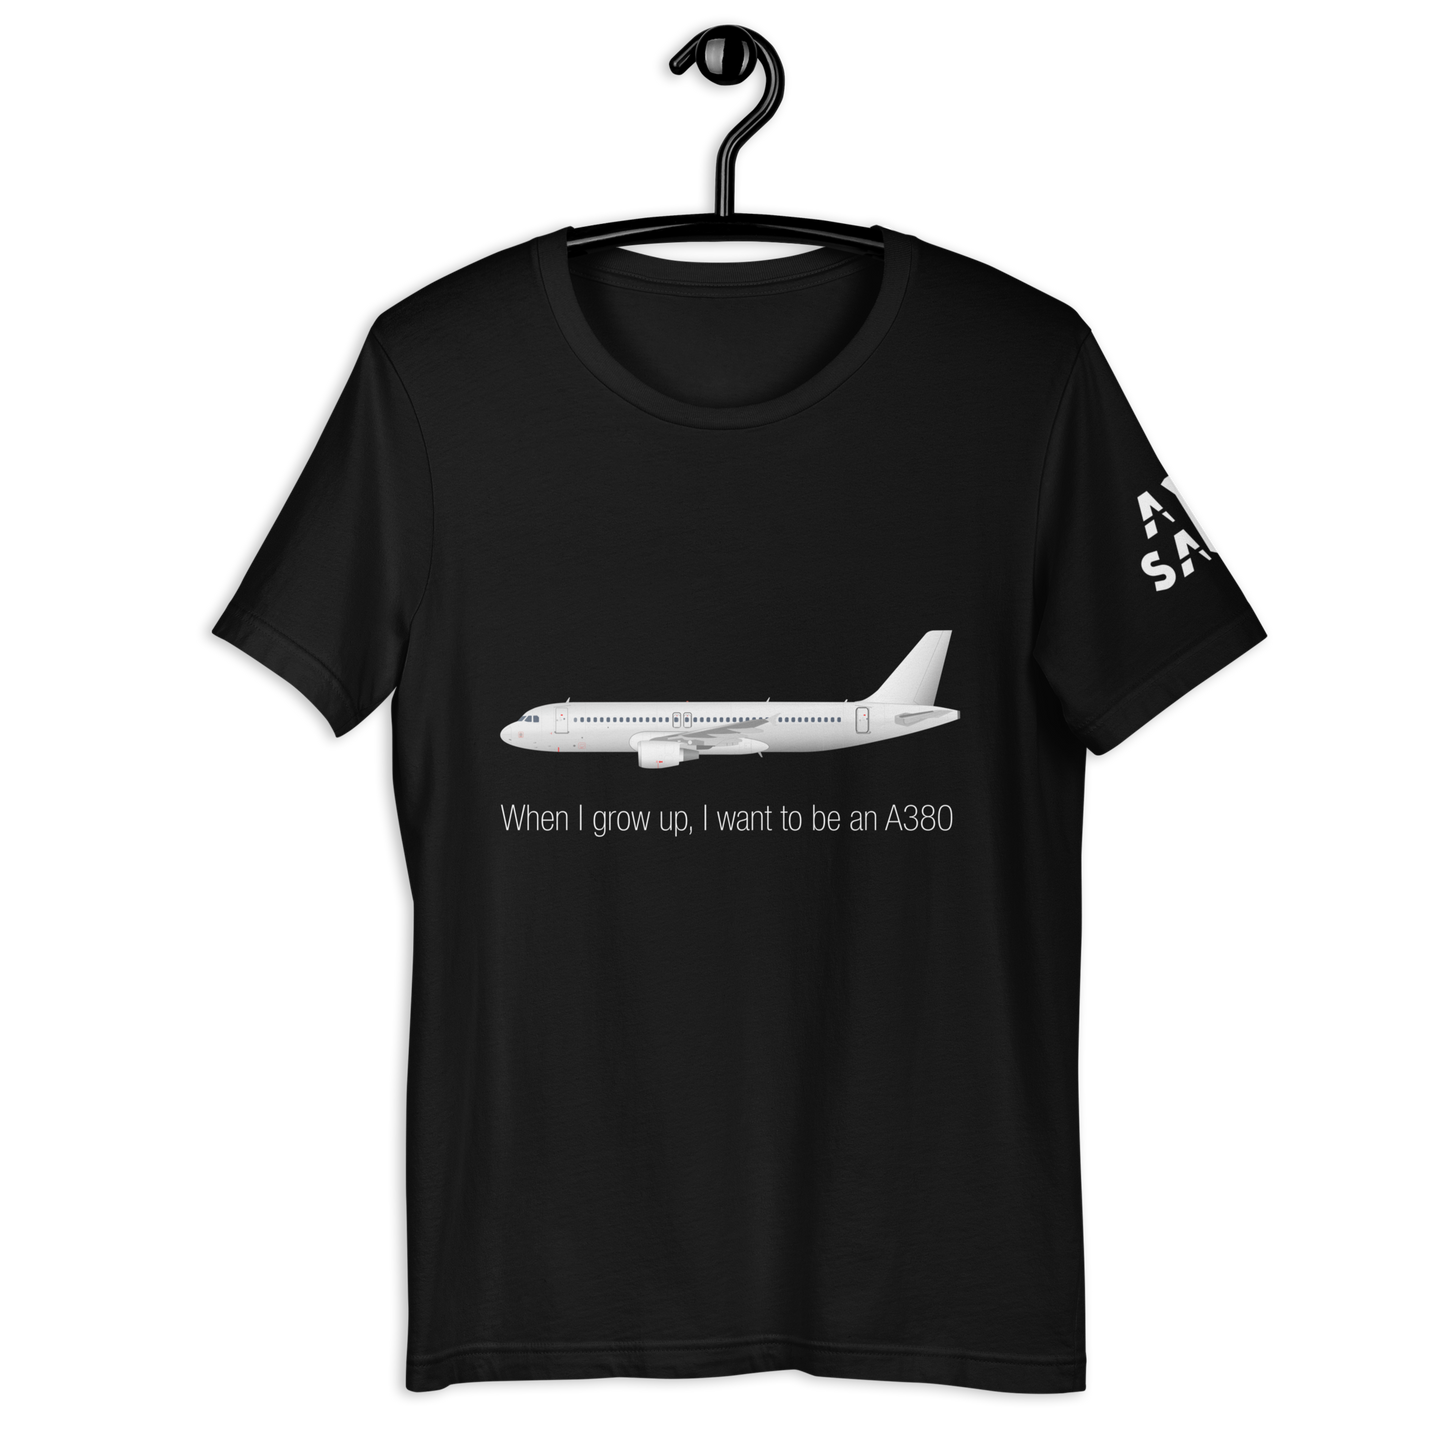 Future Airbus A380 Enthusiast T-Shirt